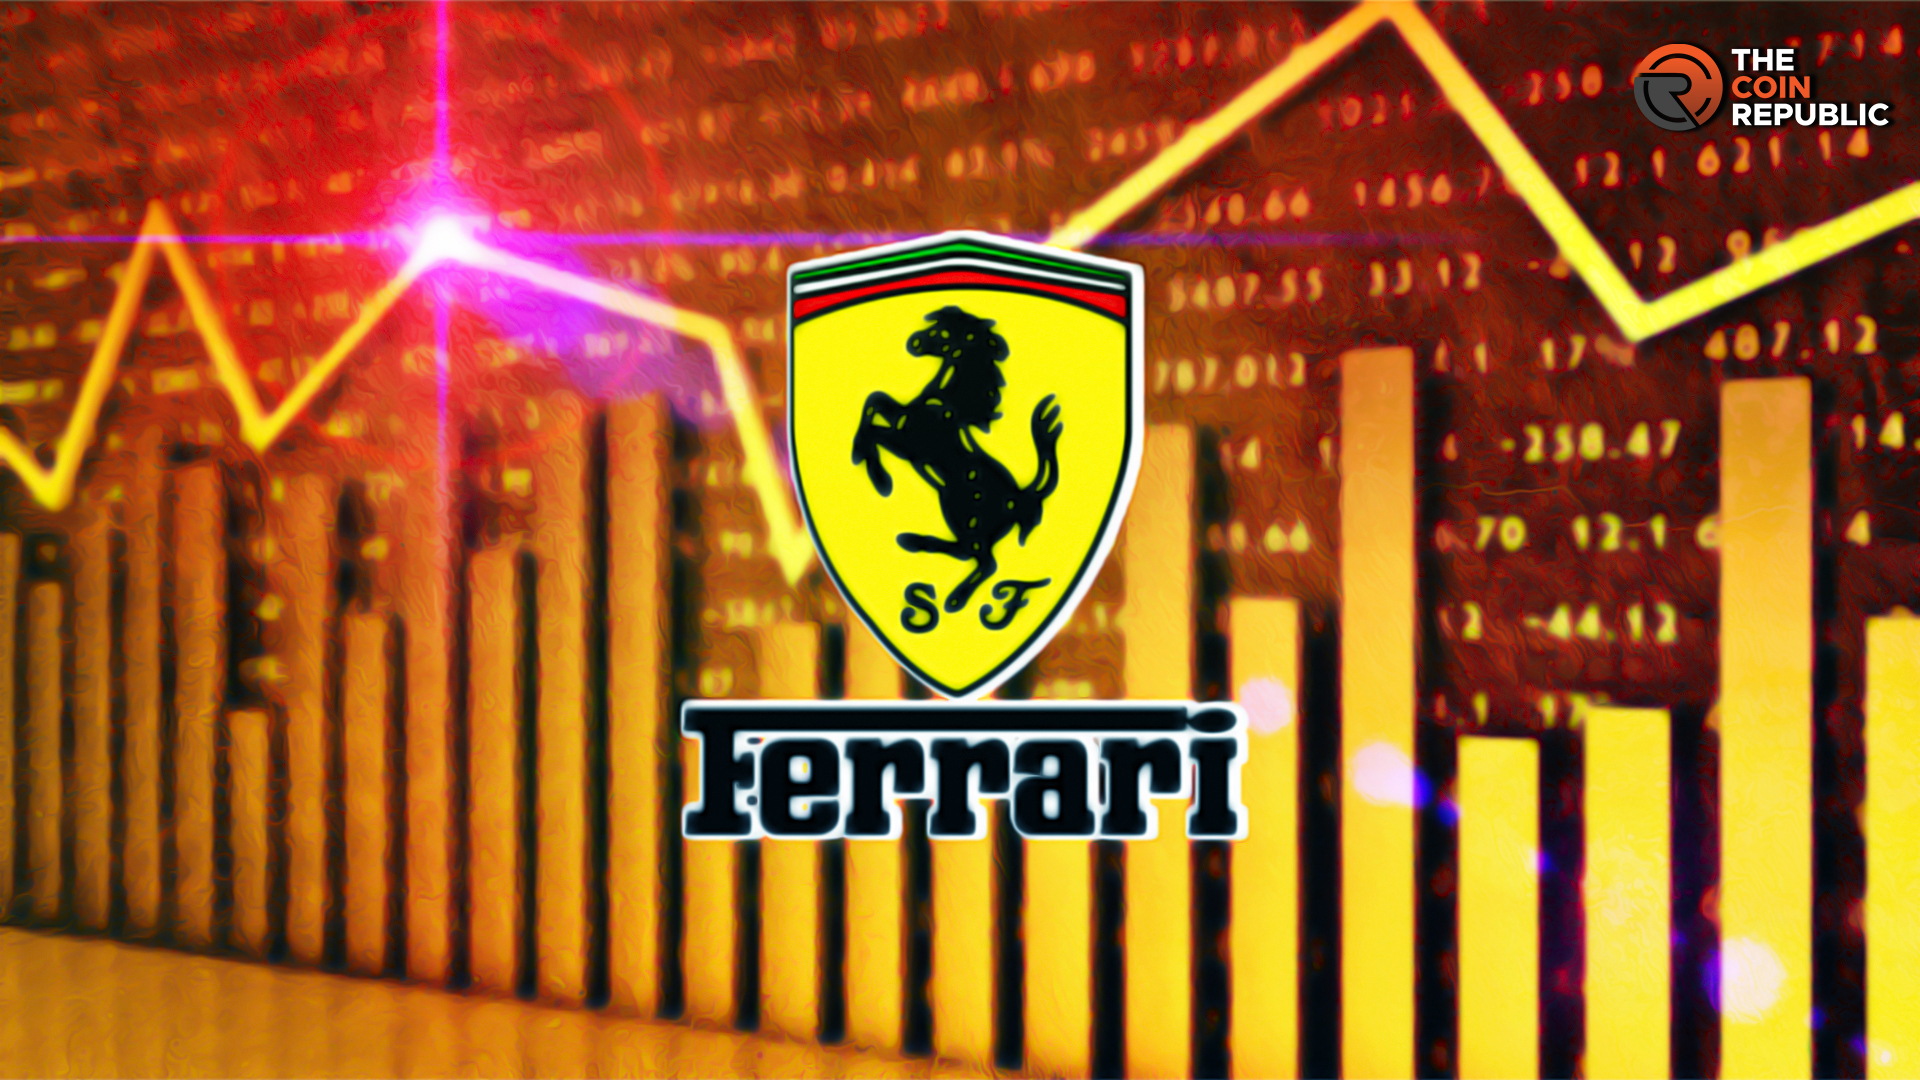 Ferrari Stock Price Slumps Below $300; Can It Recover On Monday?